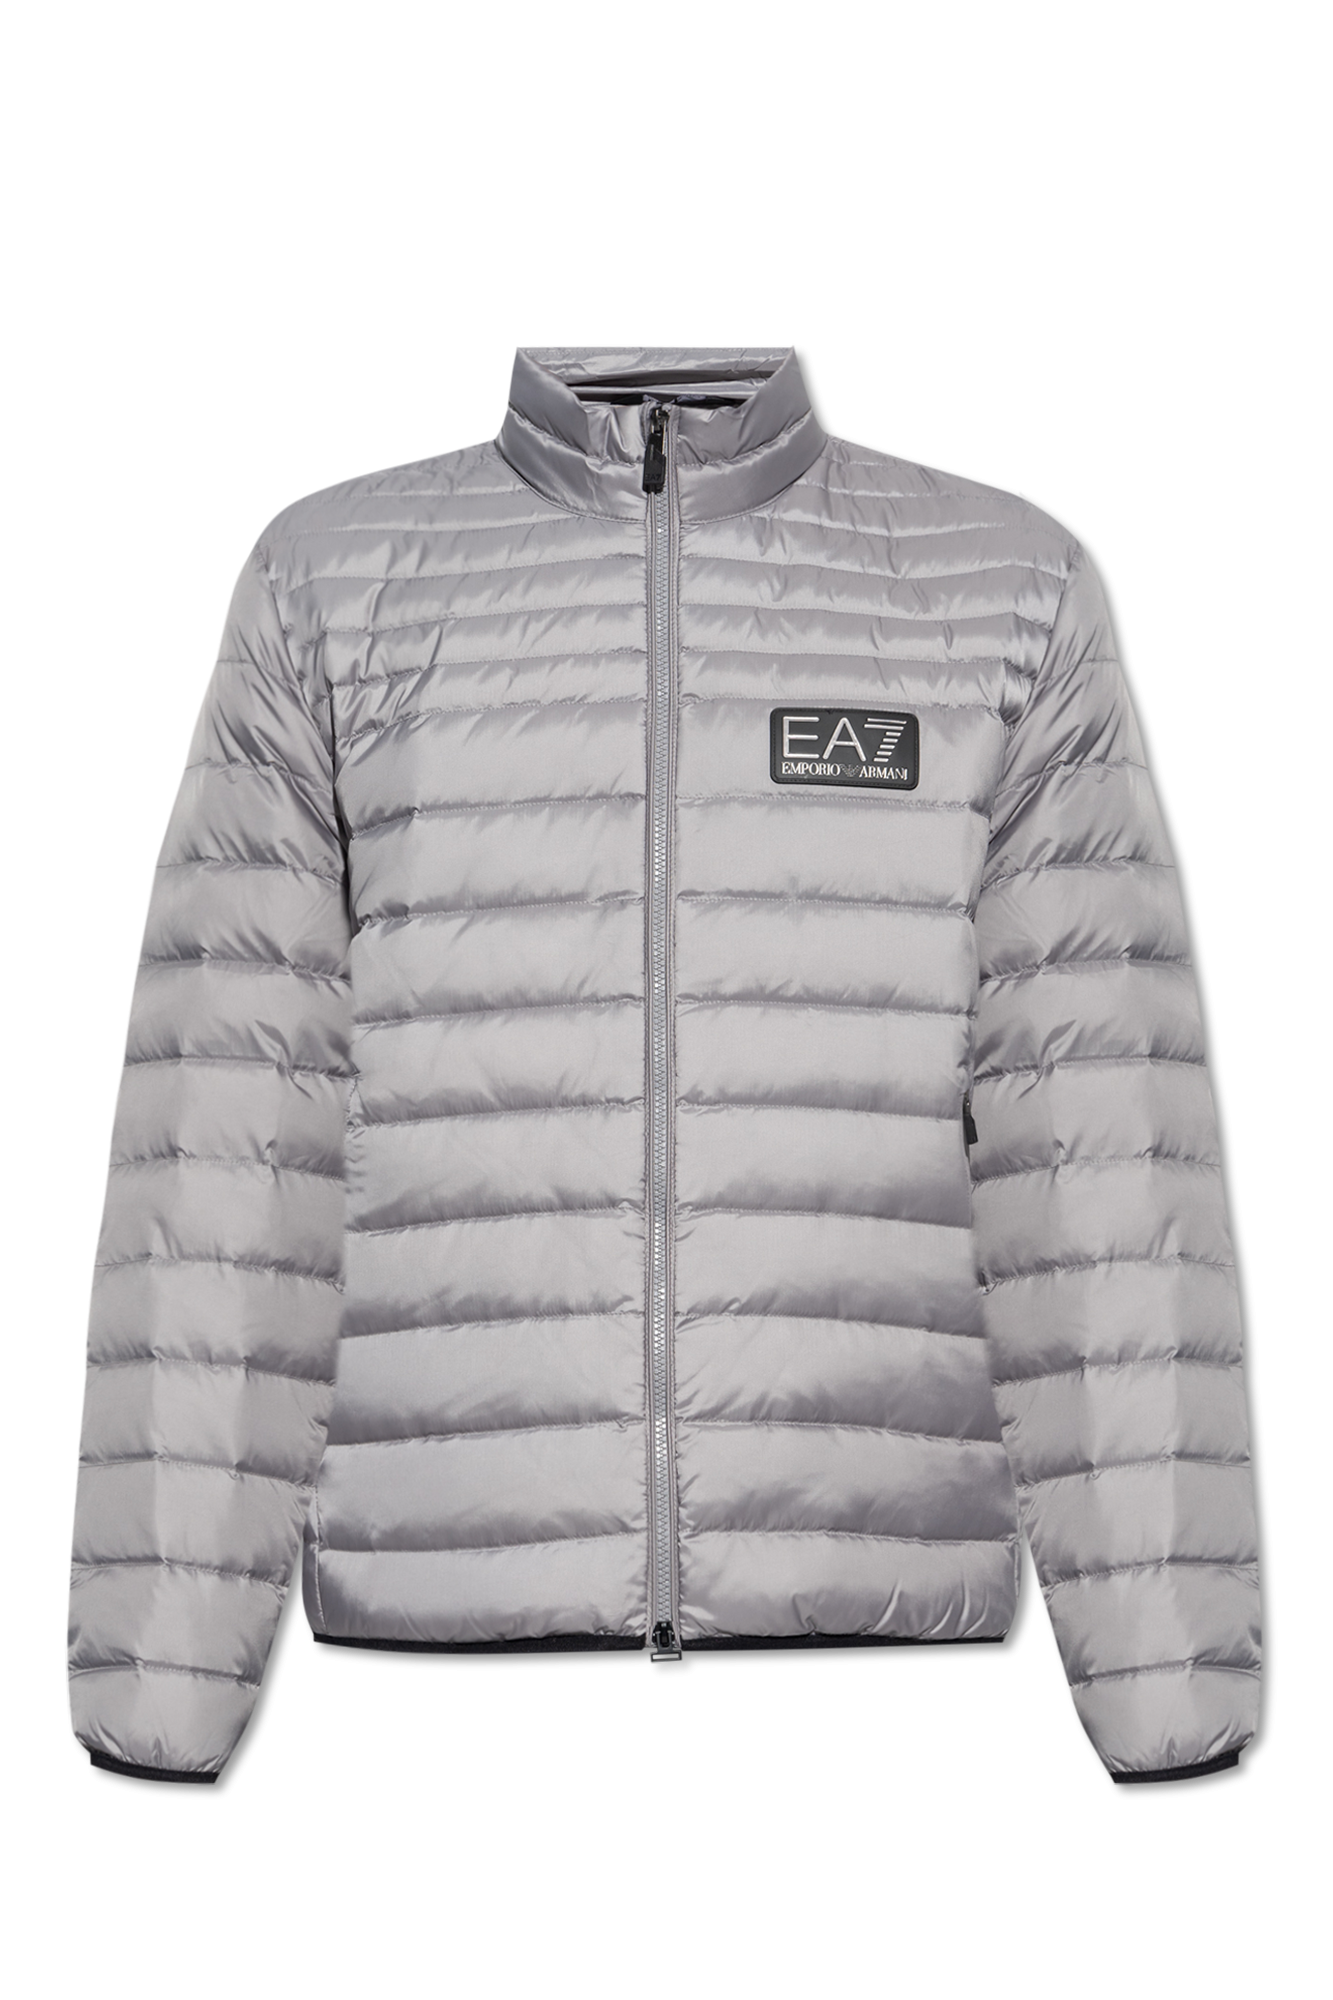 Grey Down jacket with logo EA7 Emporio Armani - Vitkac Germany